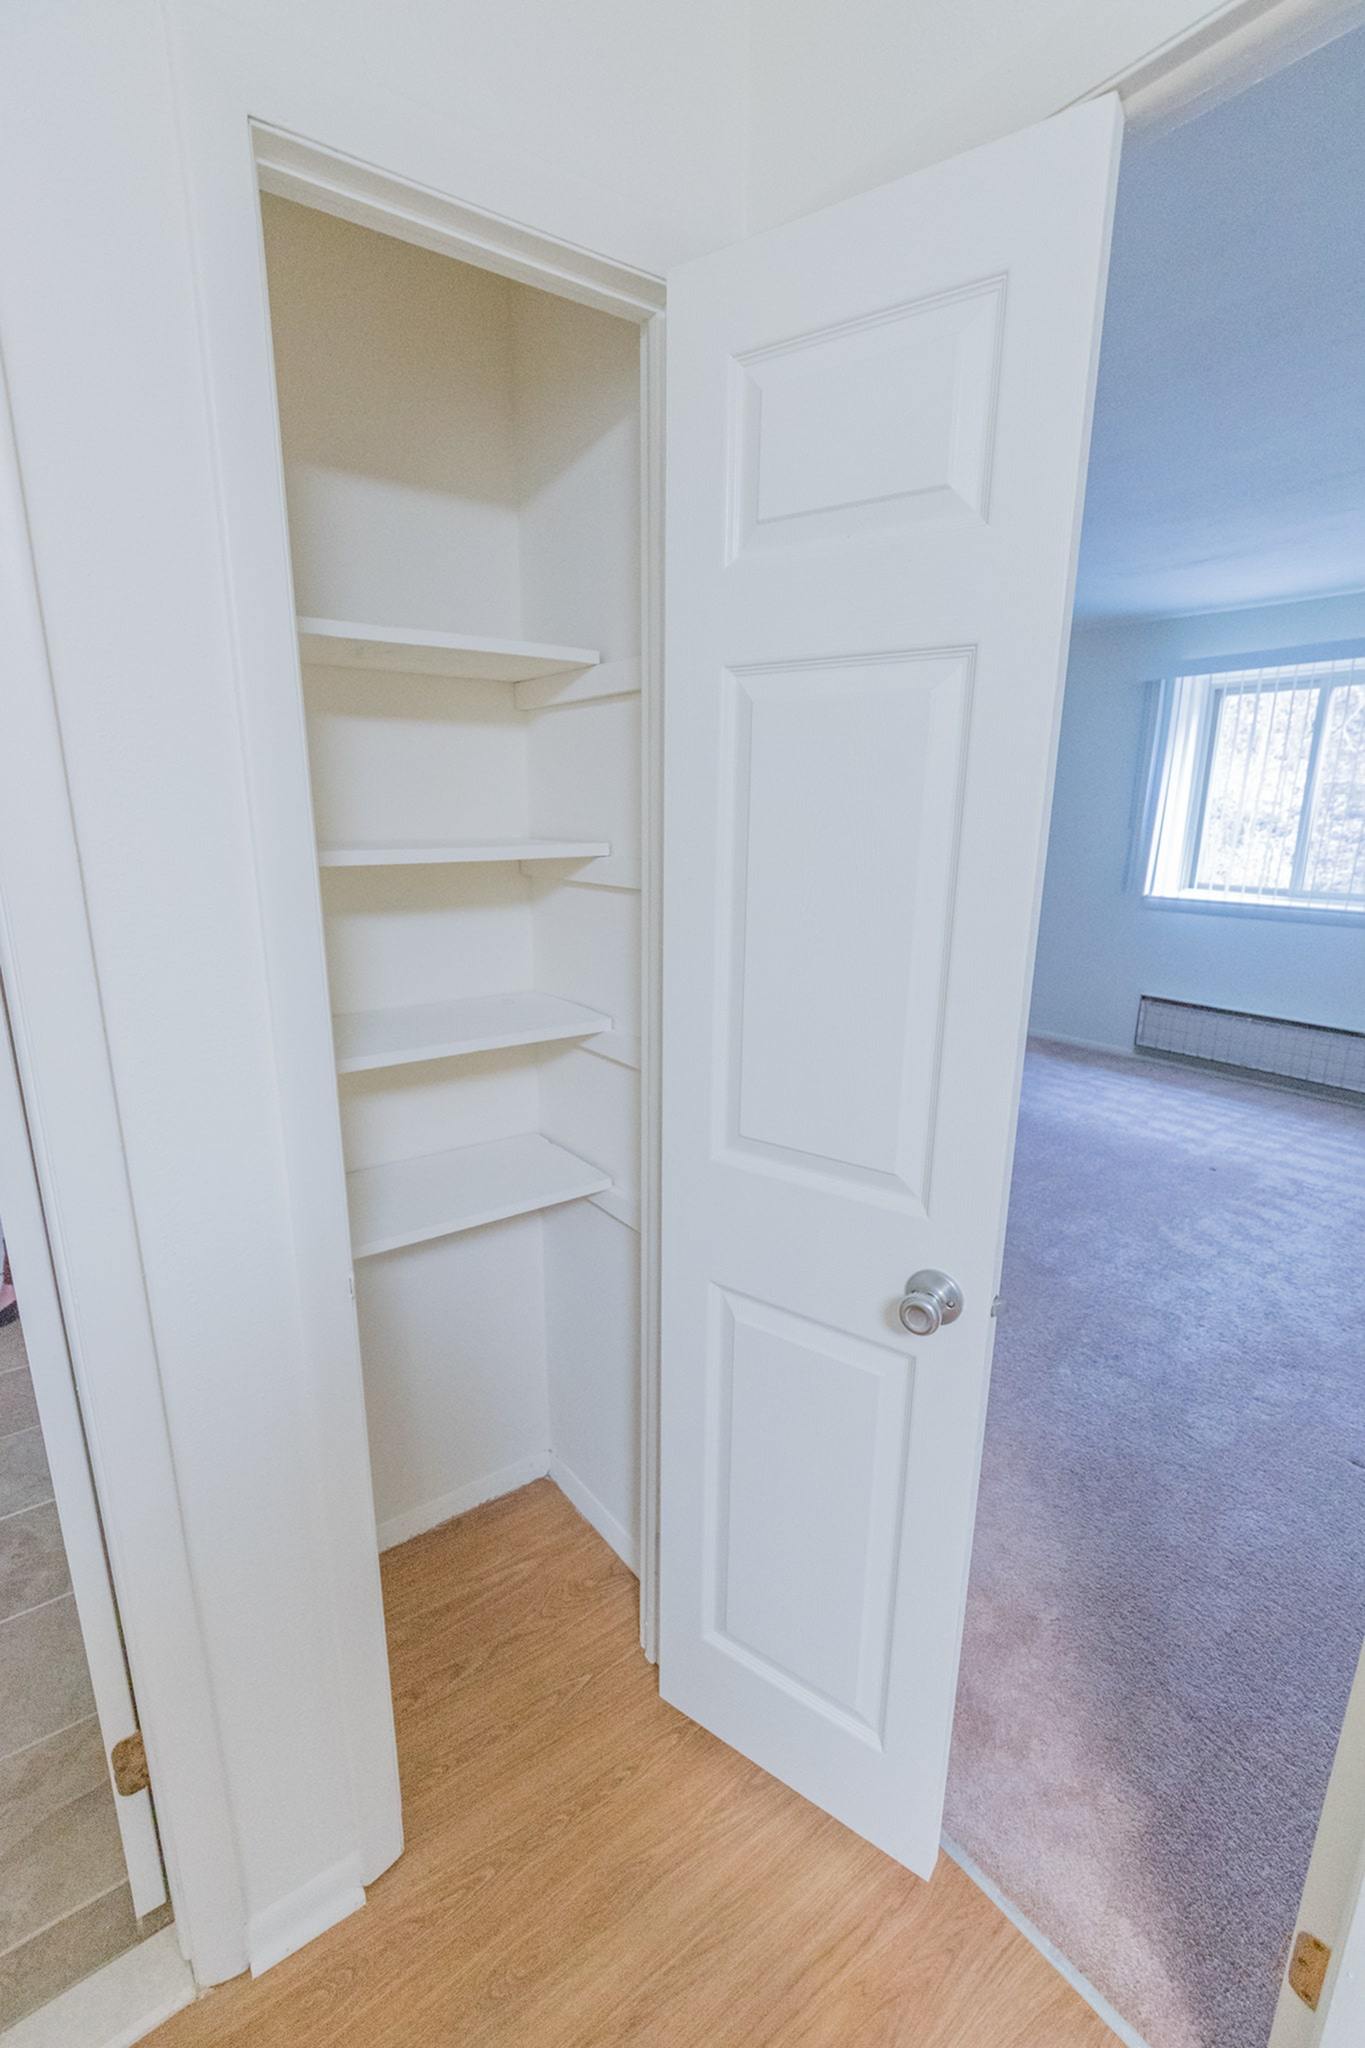 Pantry closet with shelves.